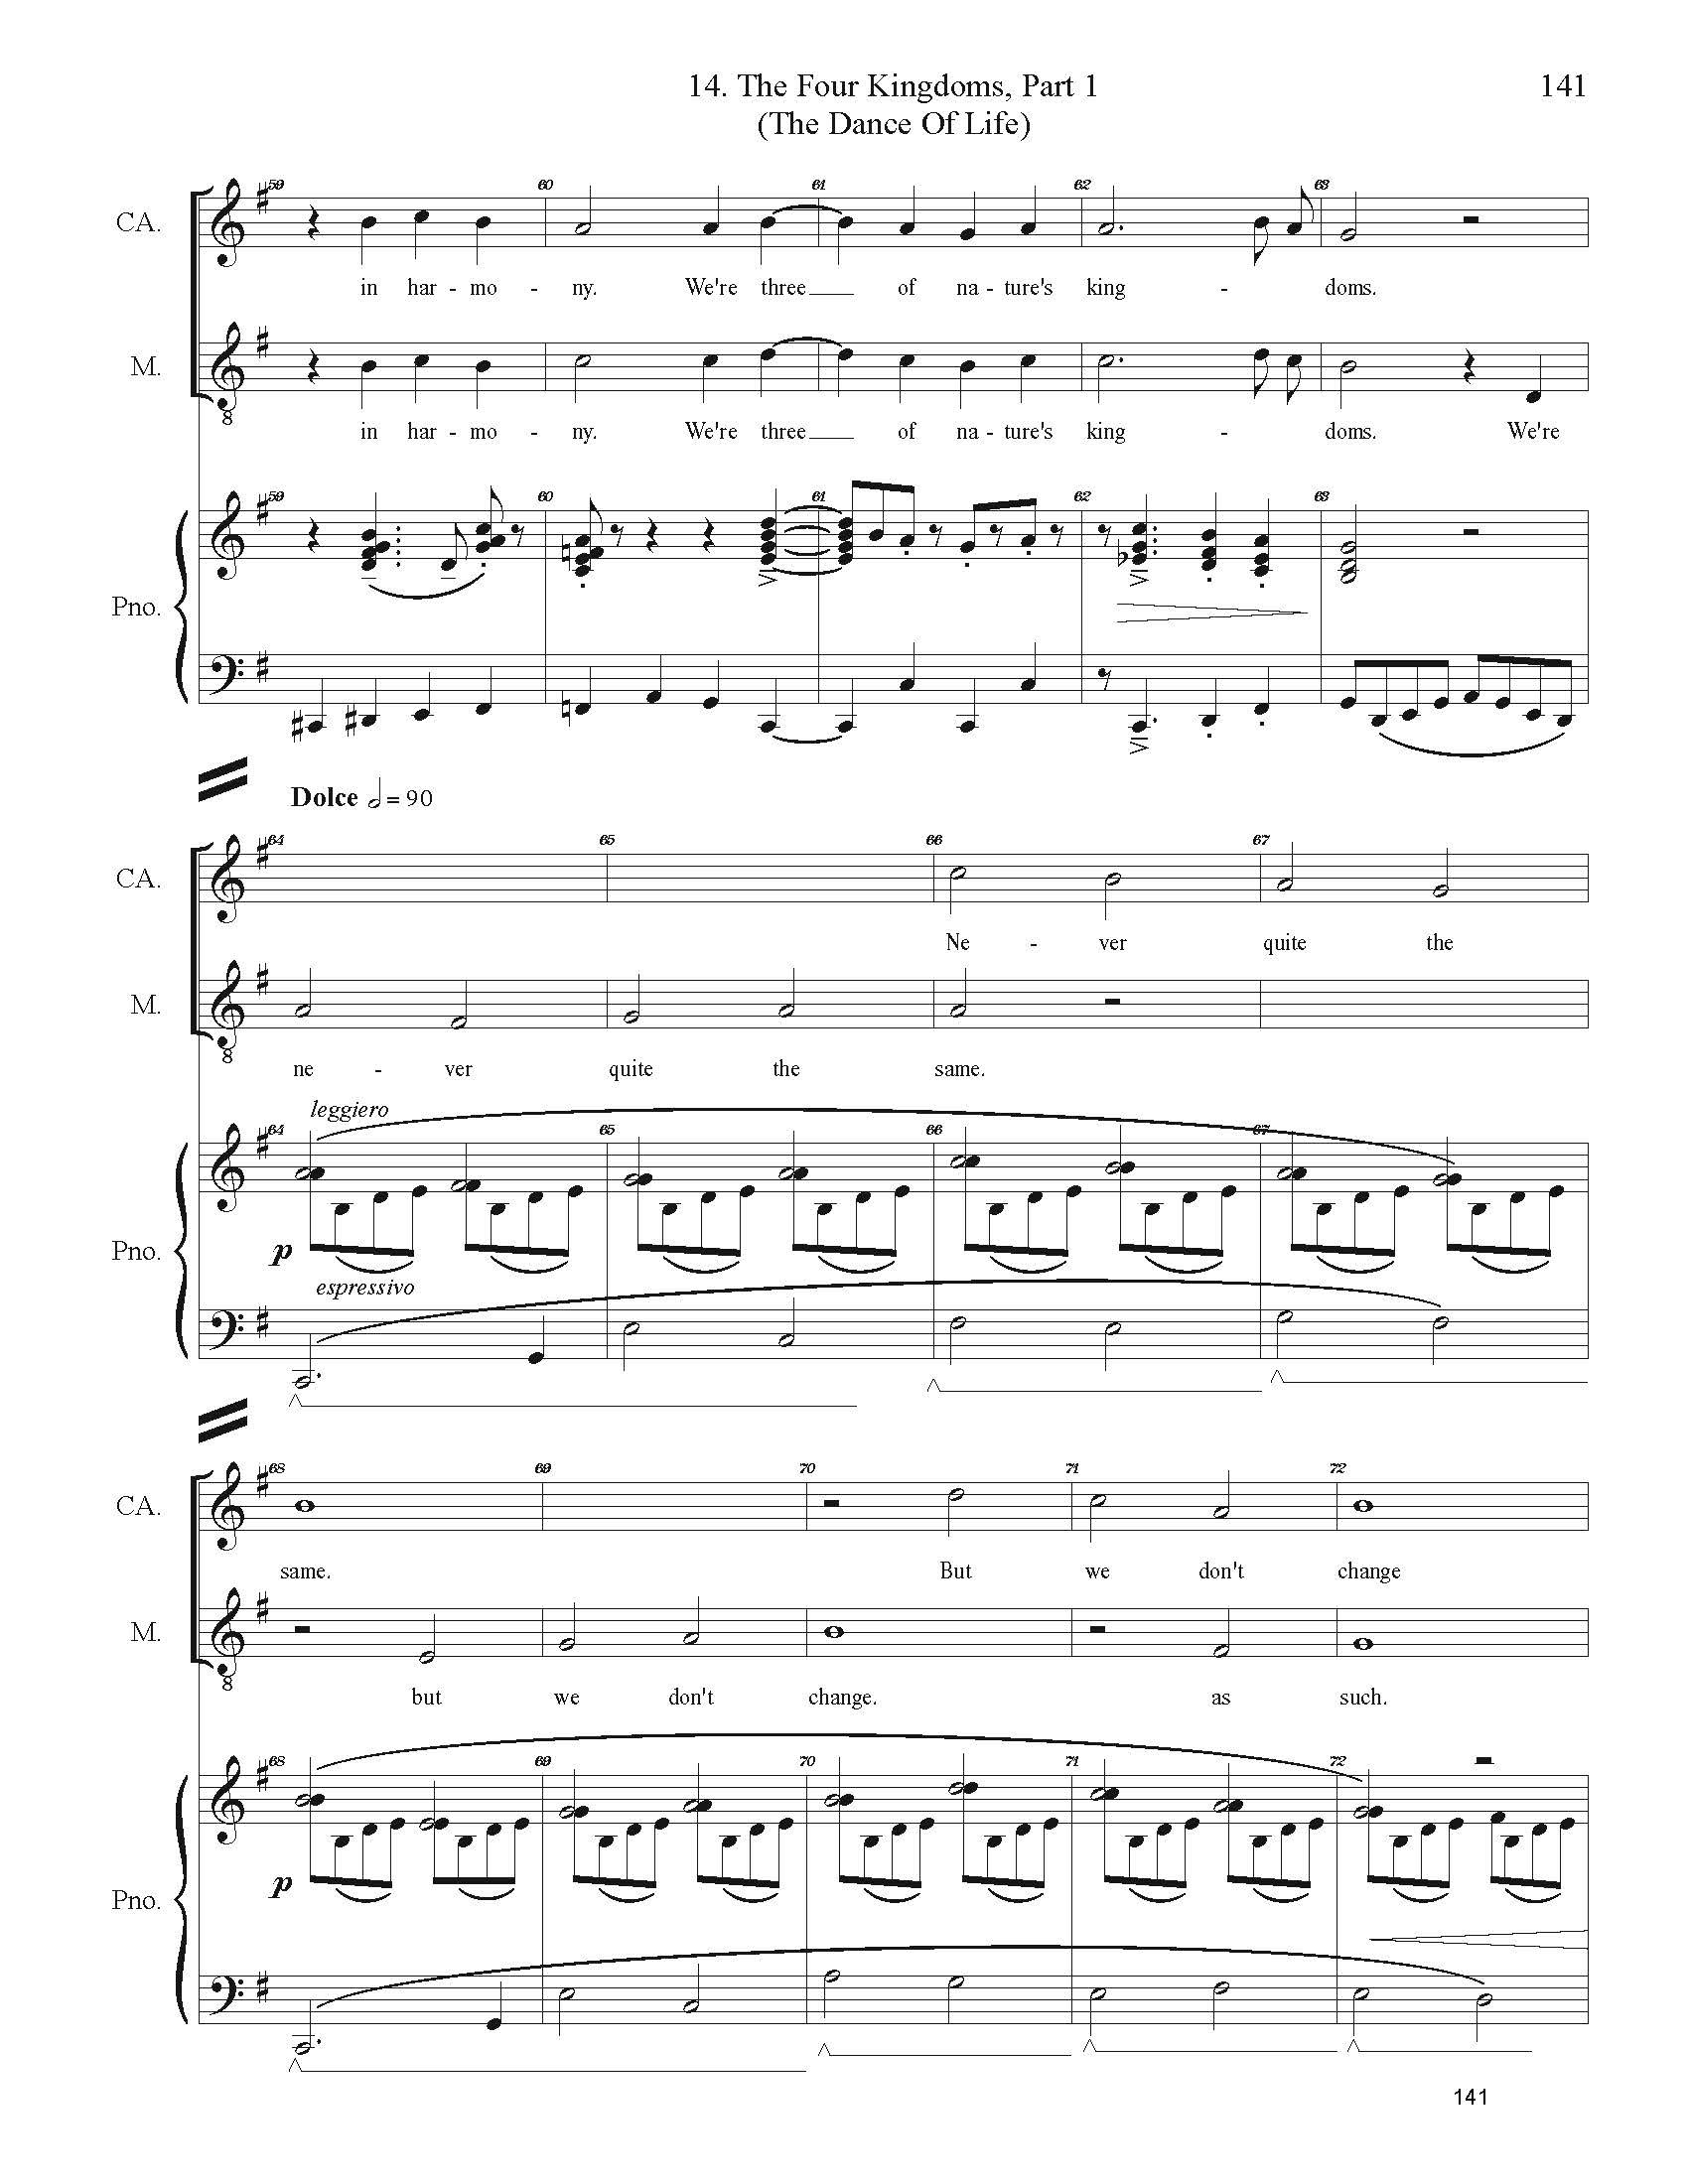 FULL PIANO VOCAL SCORE DRAFT 1 - Score_Page_141.jpg